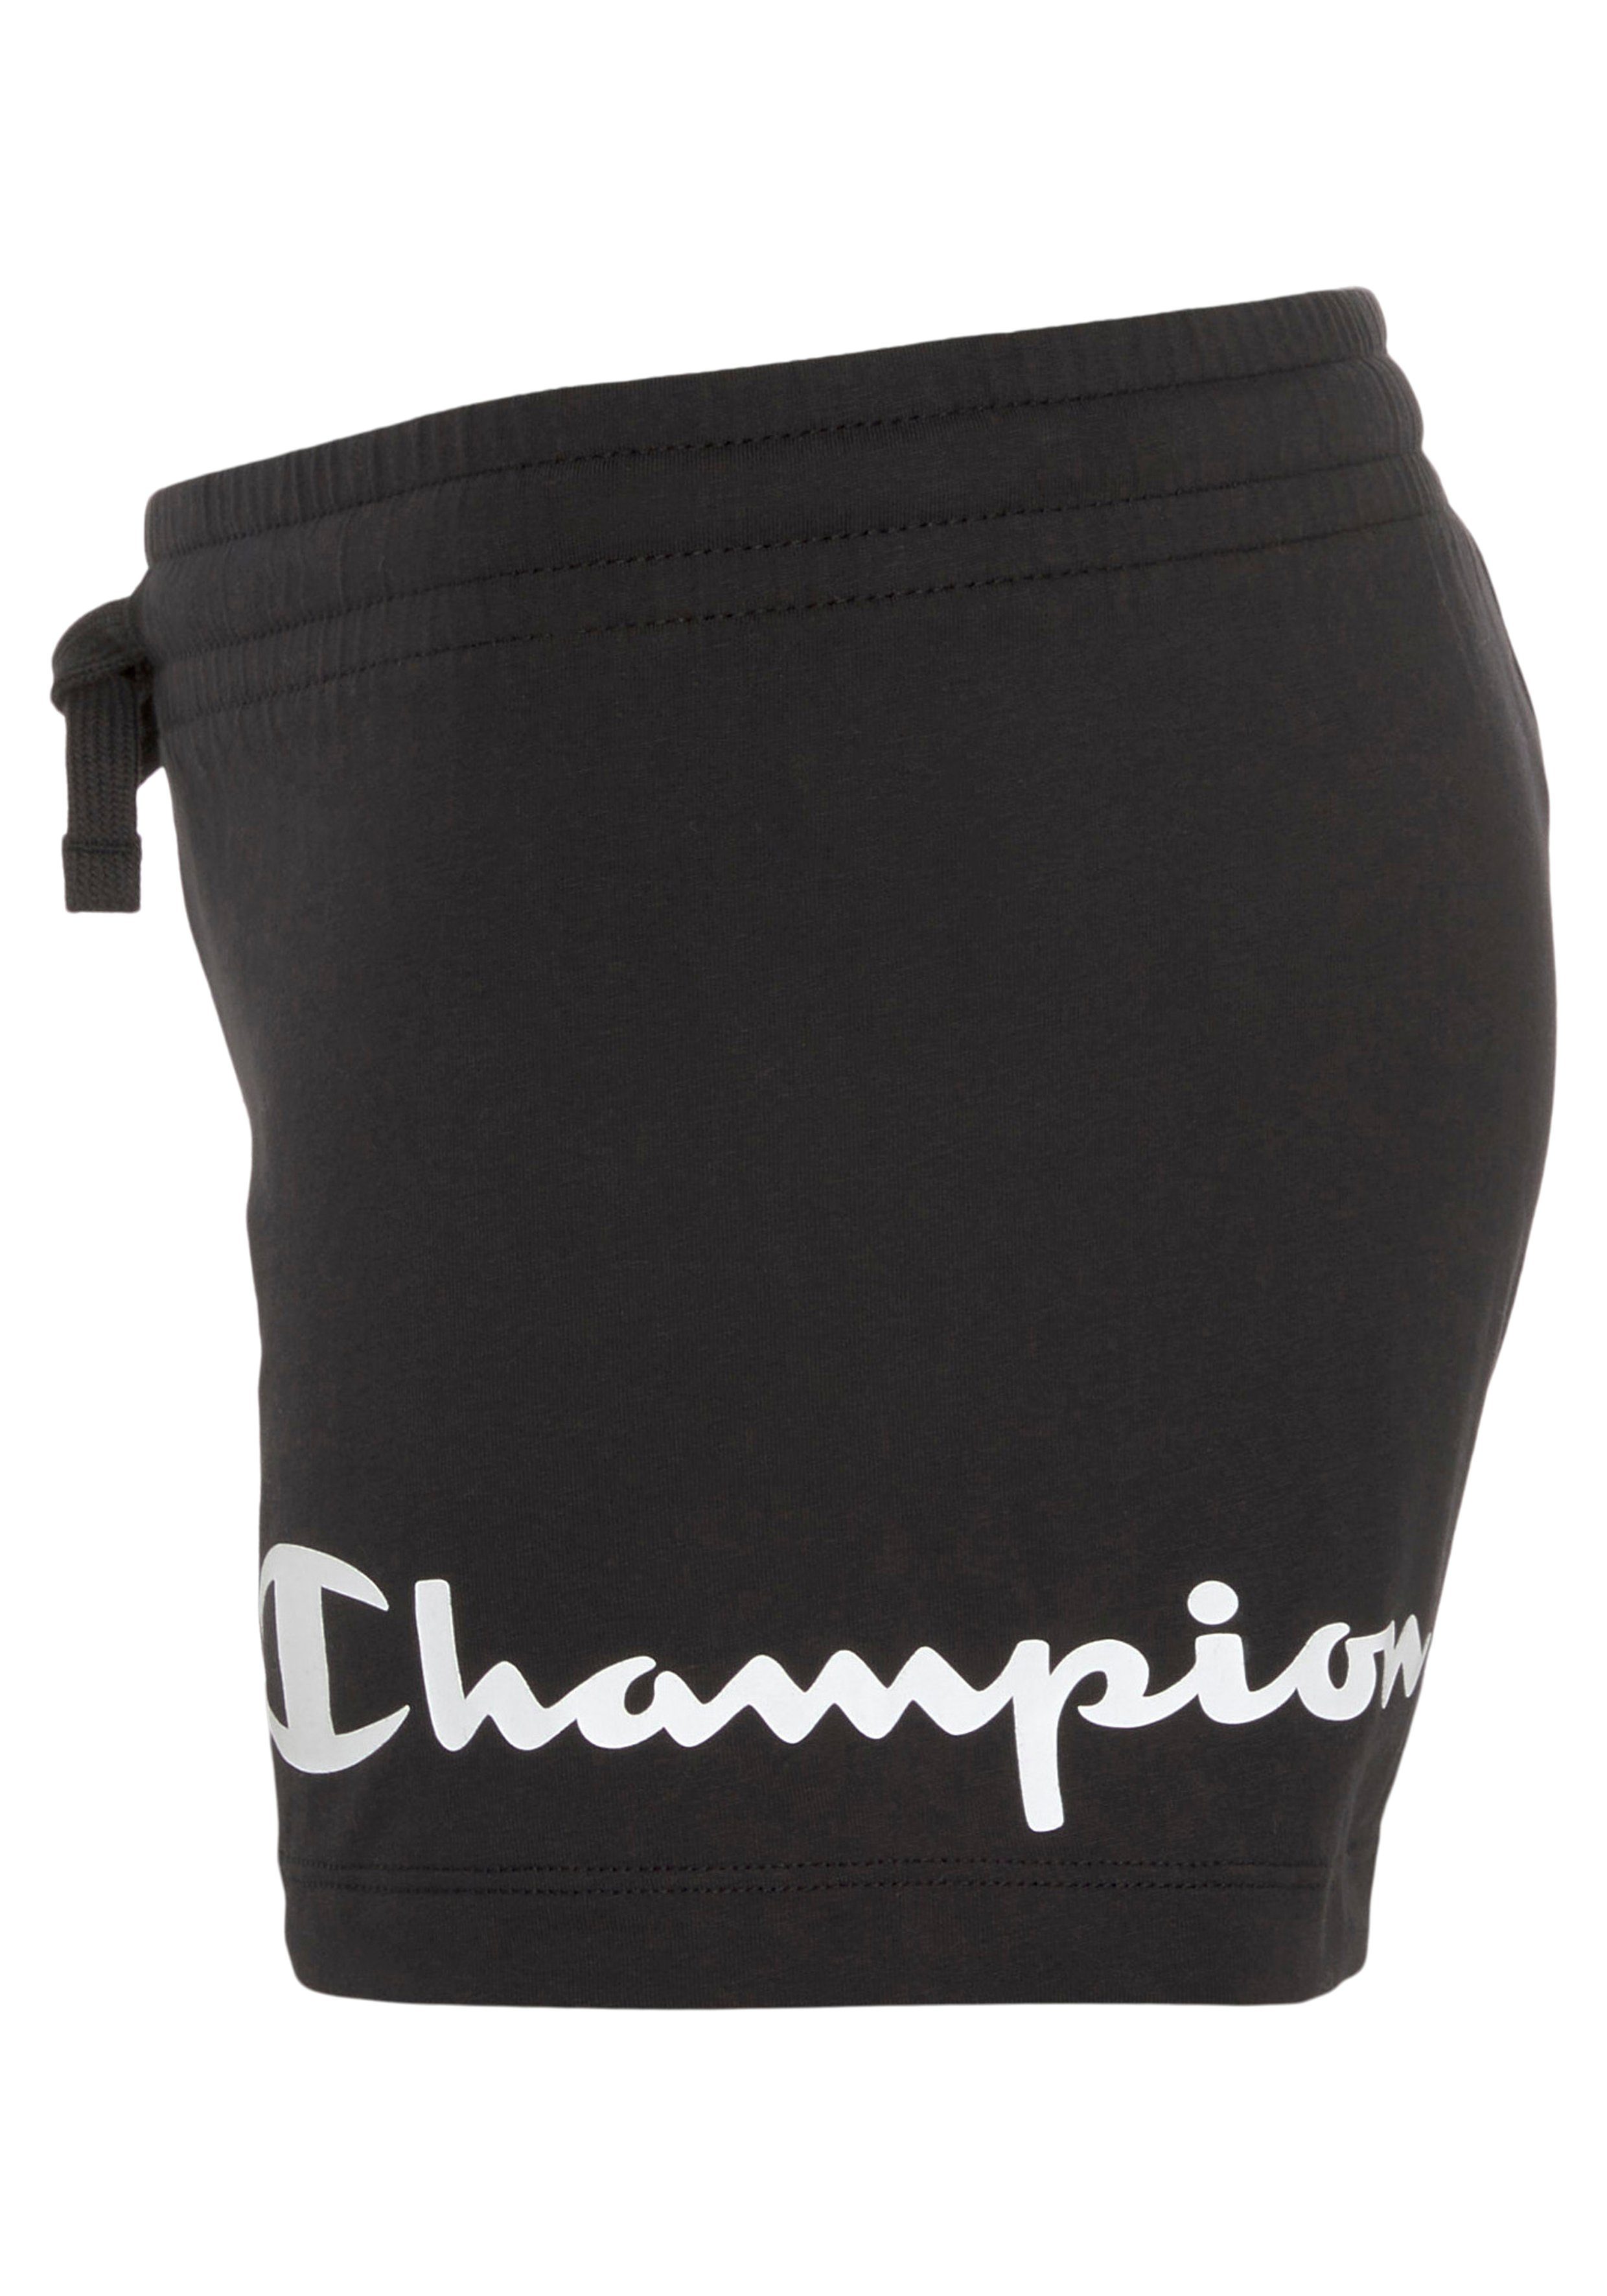 Champion Shorts